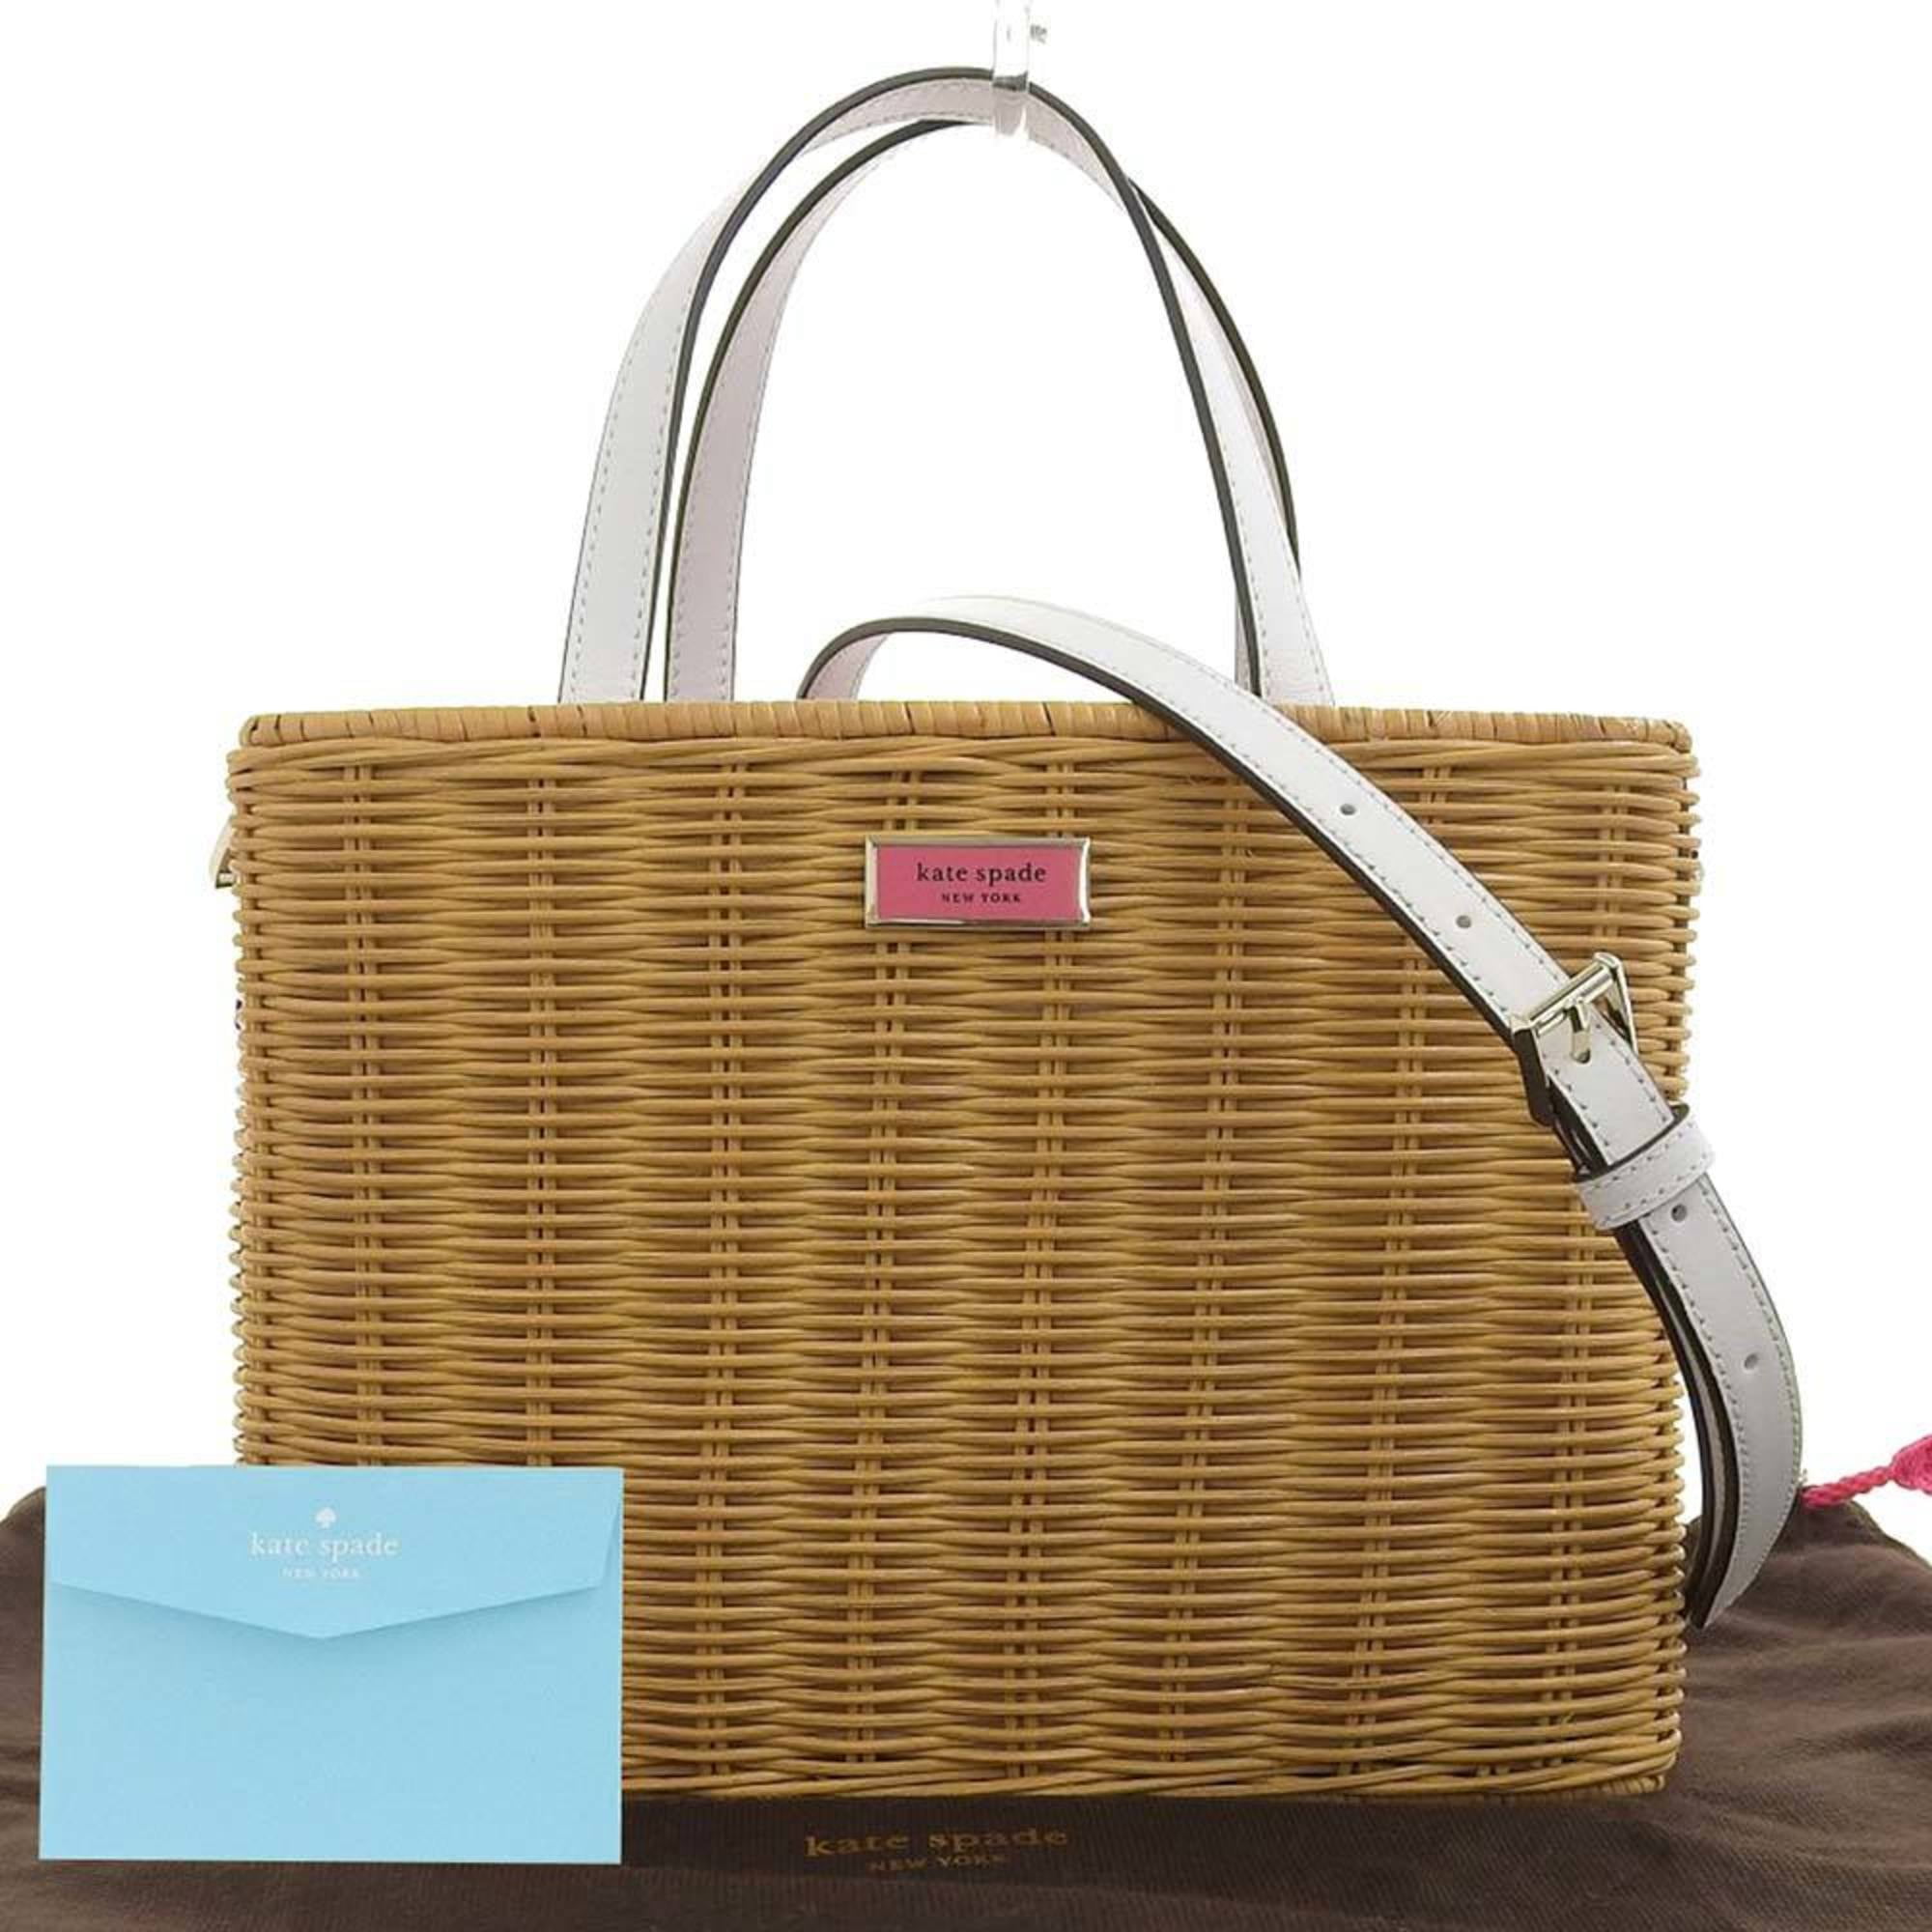 Authenticated Used Kate spade KATE SPADE handbag basket bag floral design  2WAY rattan leather PXRVA264 